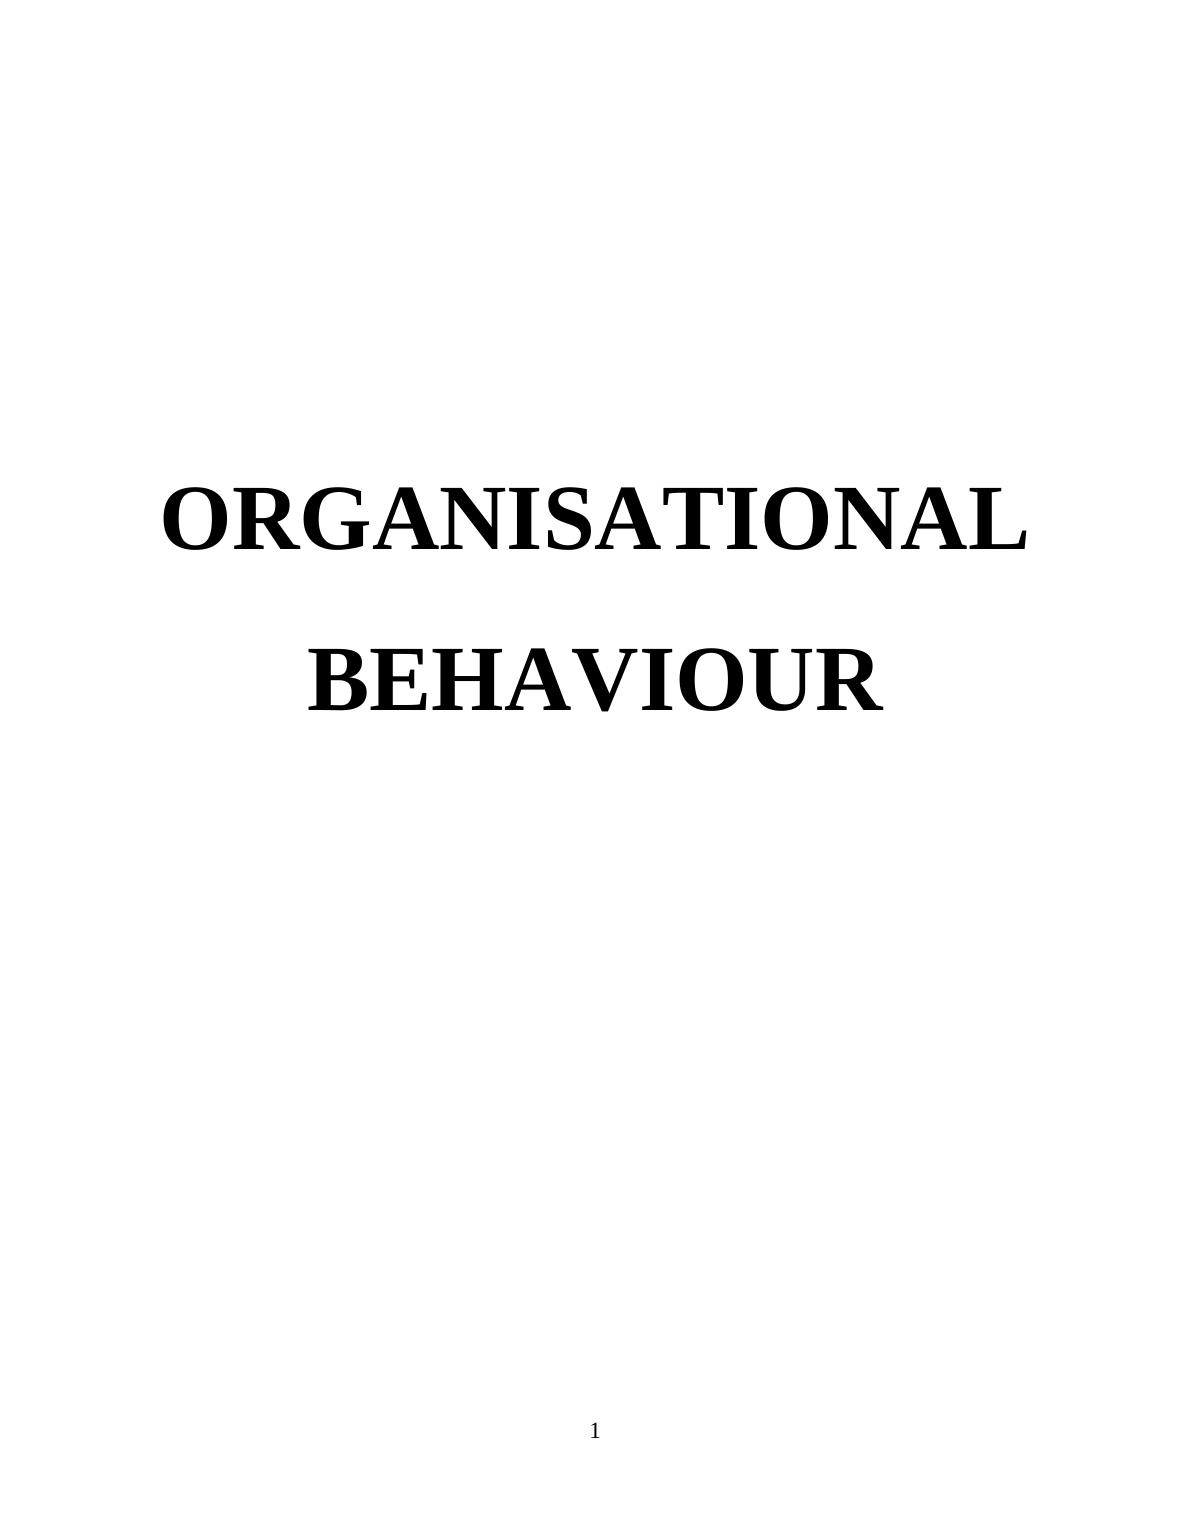 Organisational Behaviour Assignment - LG Electronics Inc_1